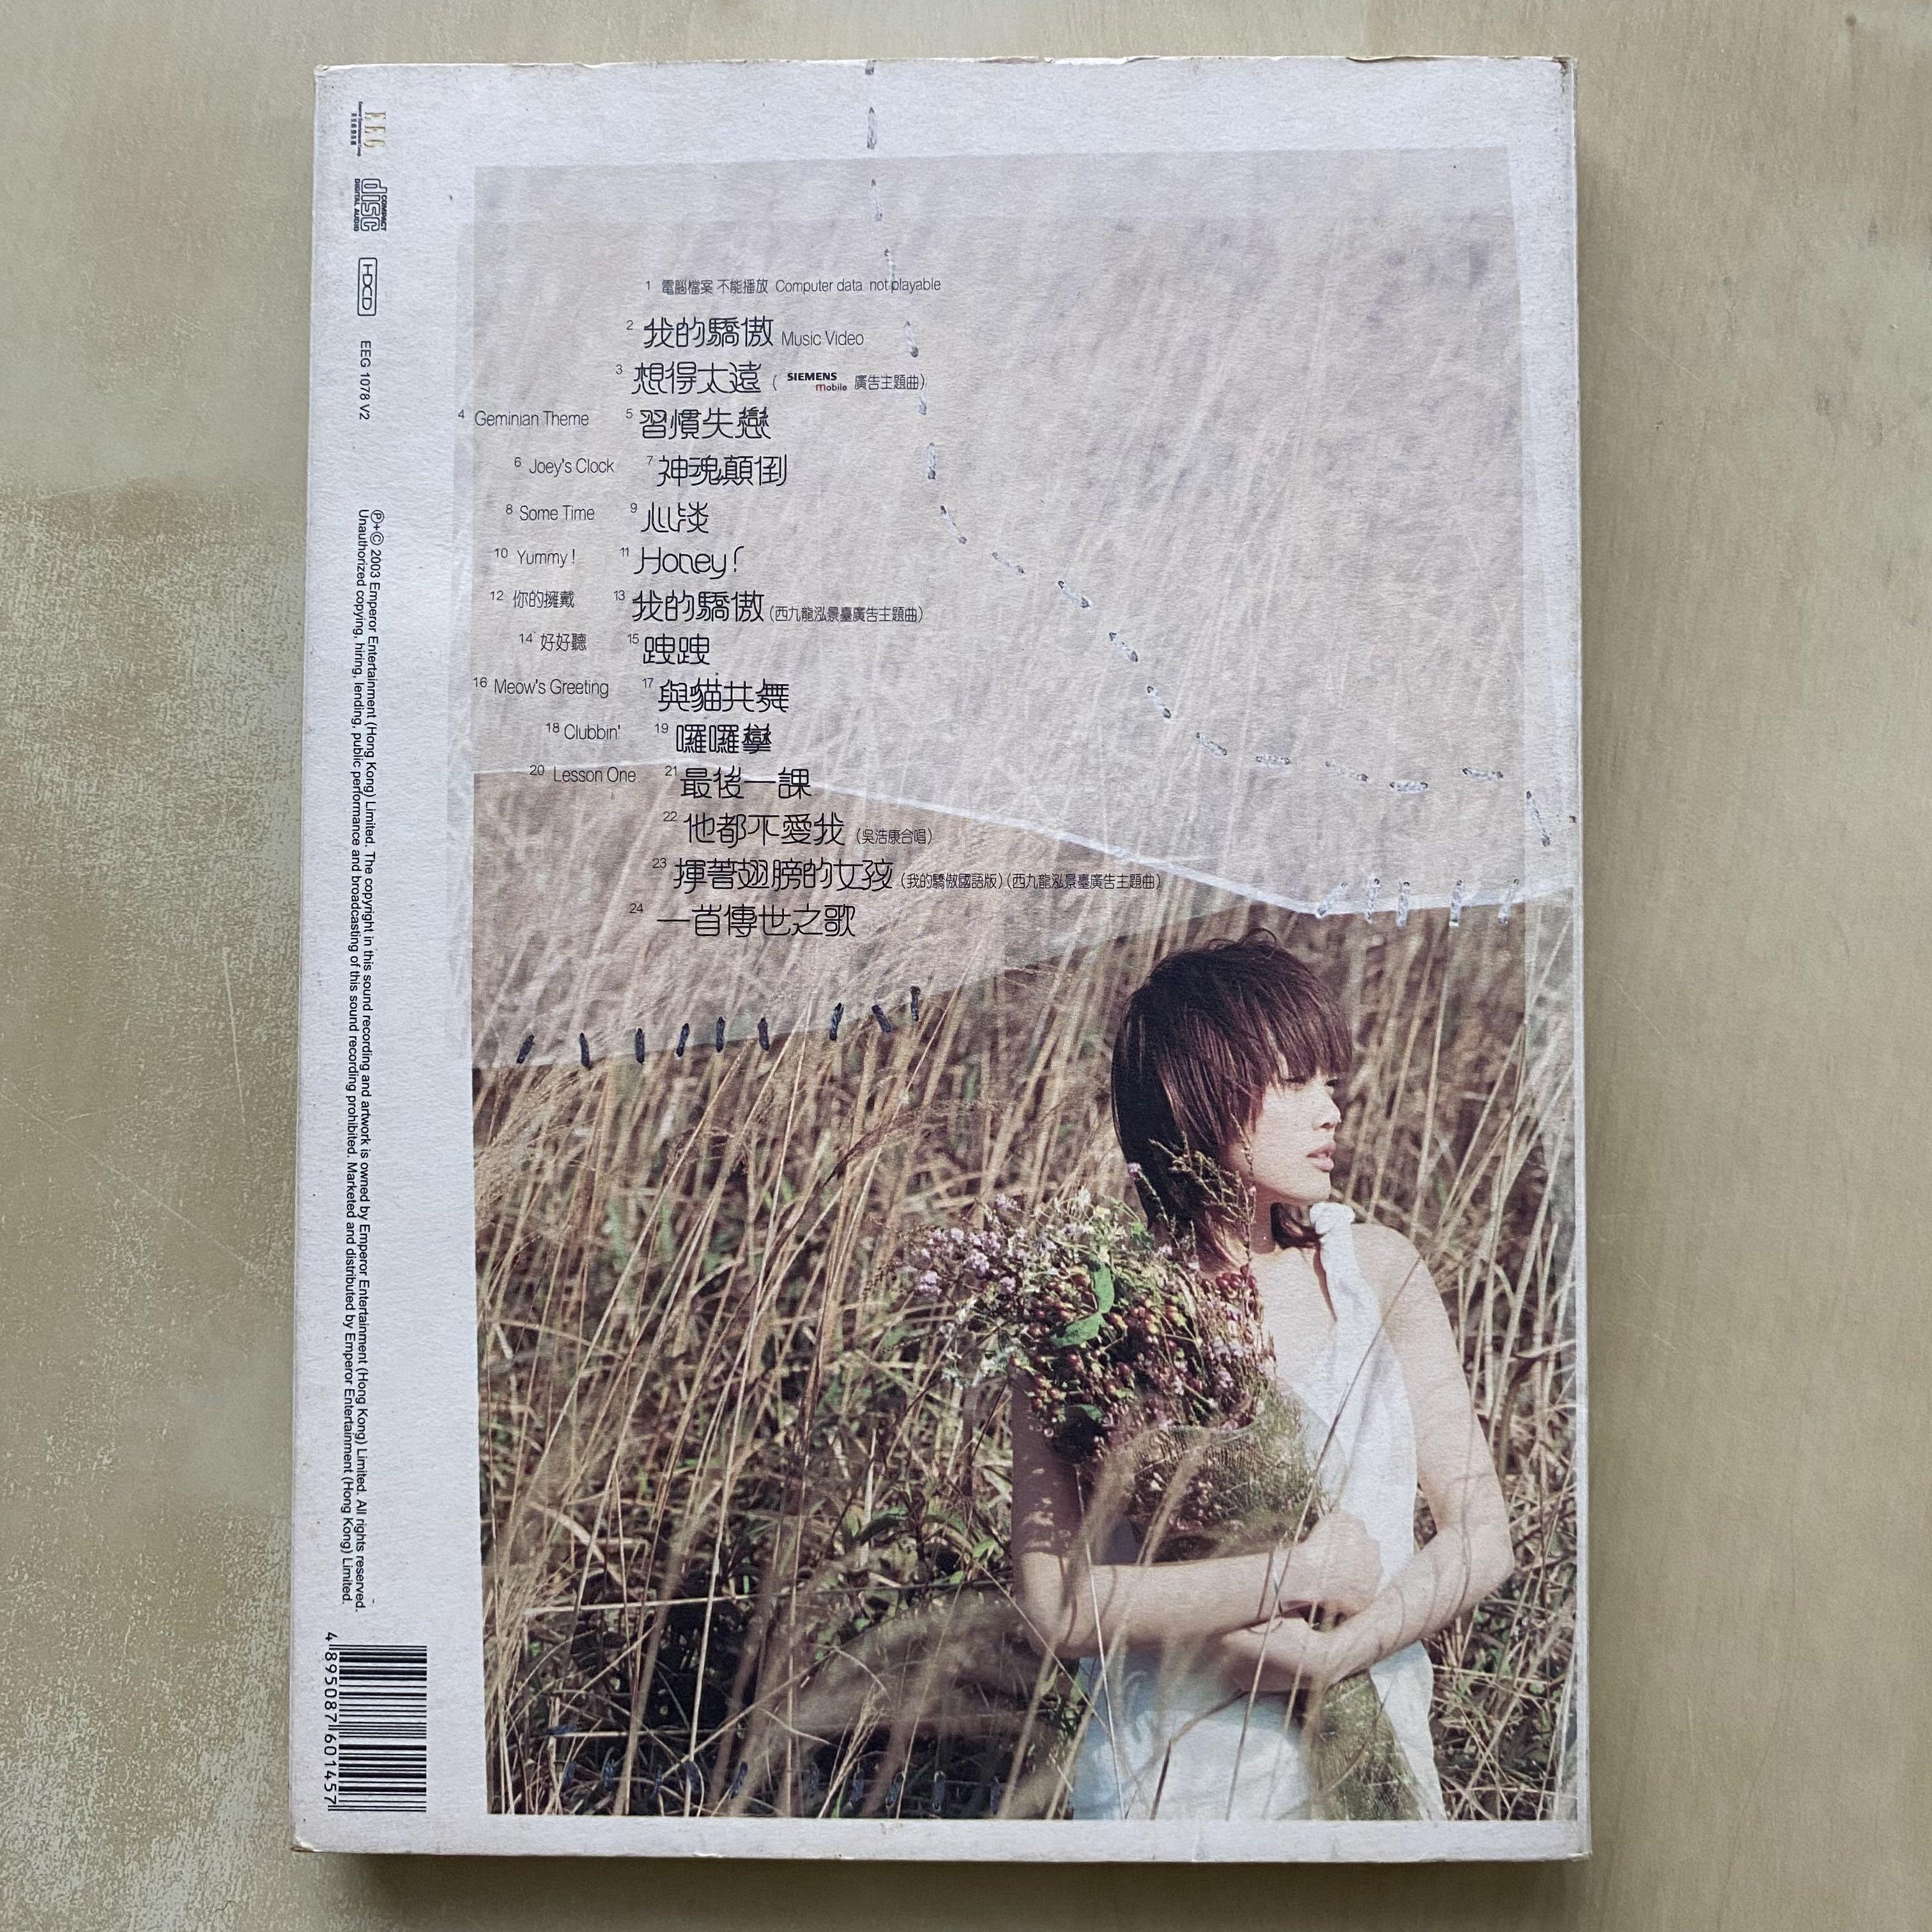 CD丨容祖兒我的驕傲(AVCD) (全新第二版) / Joey Yung My Pride (AVCD 